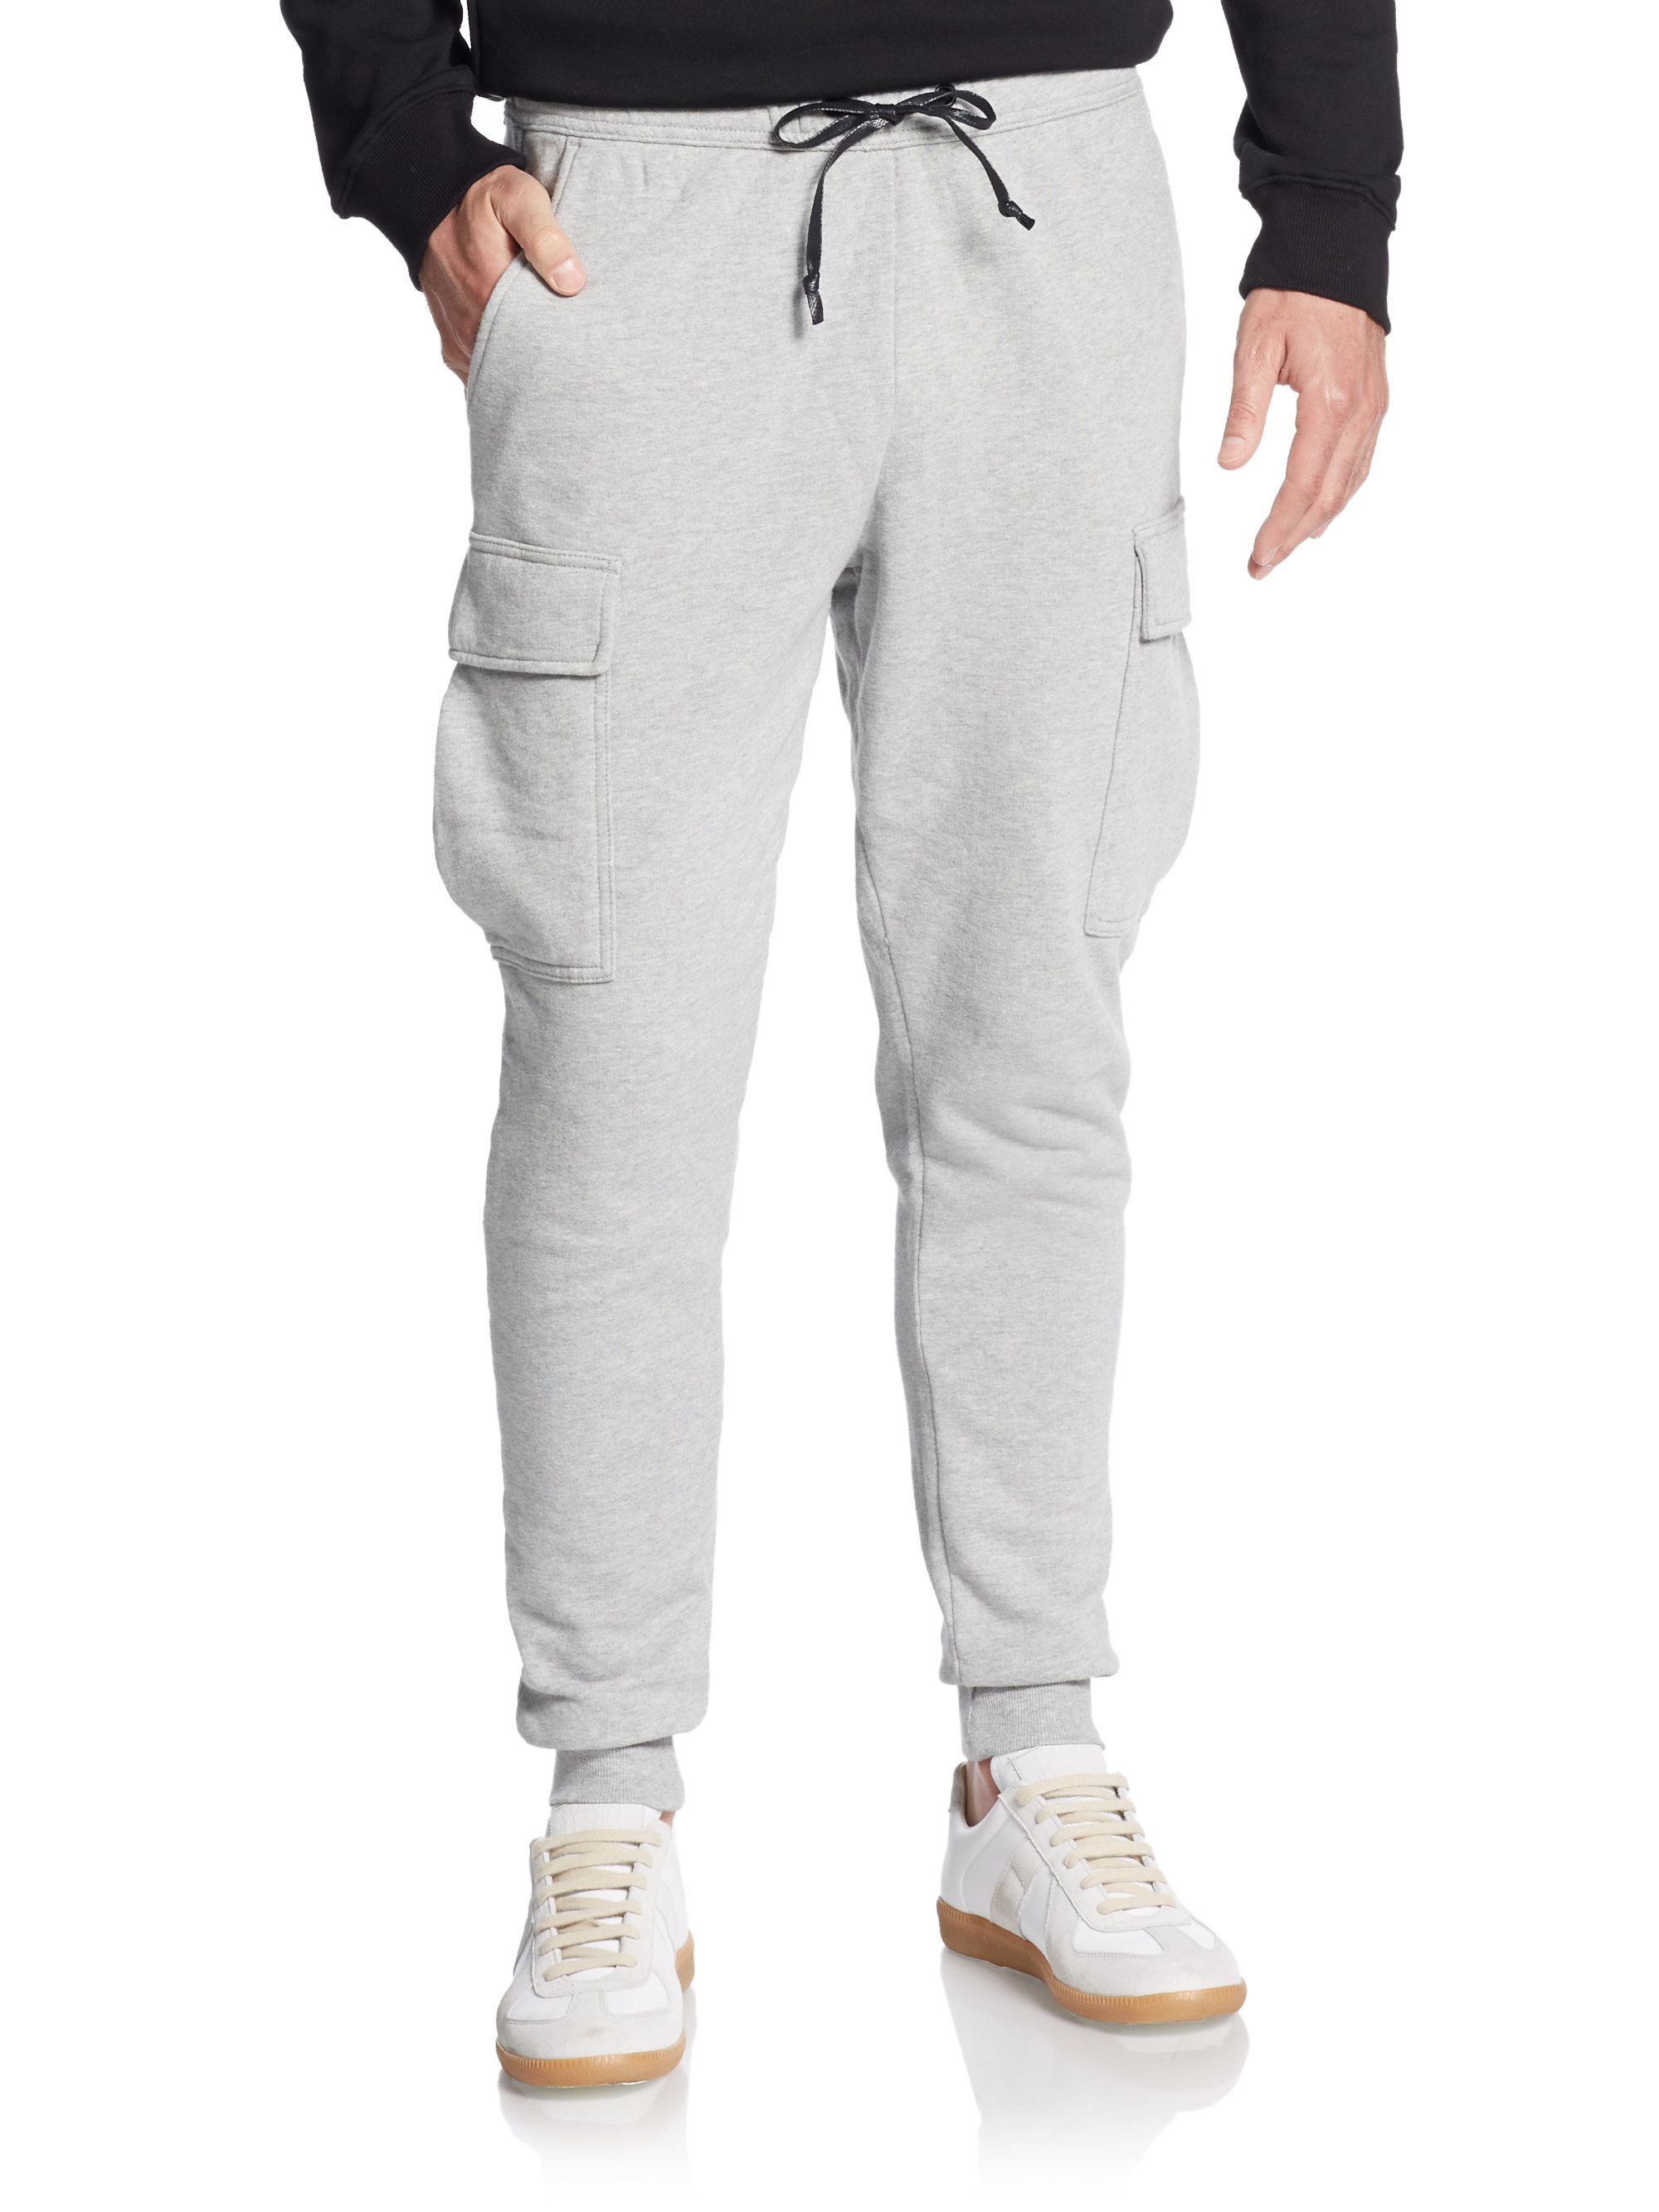 Lyst - Hudson Jeans Cargo Sweatpants in Gray for Men